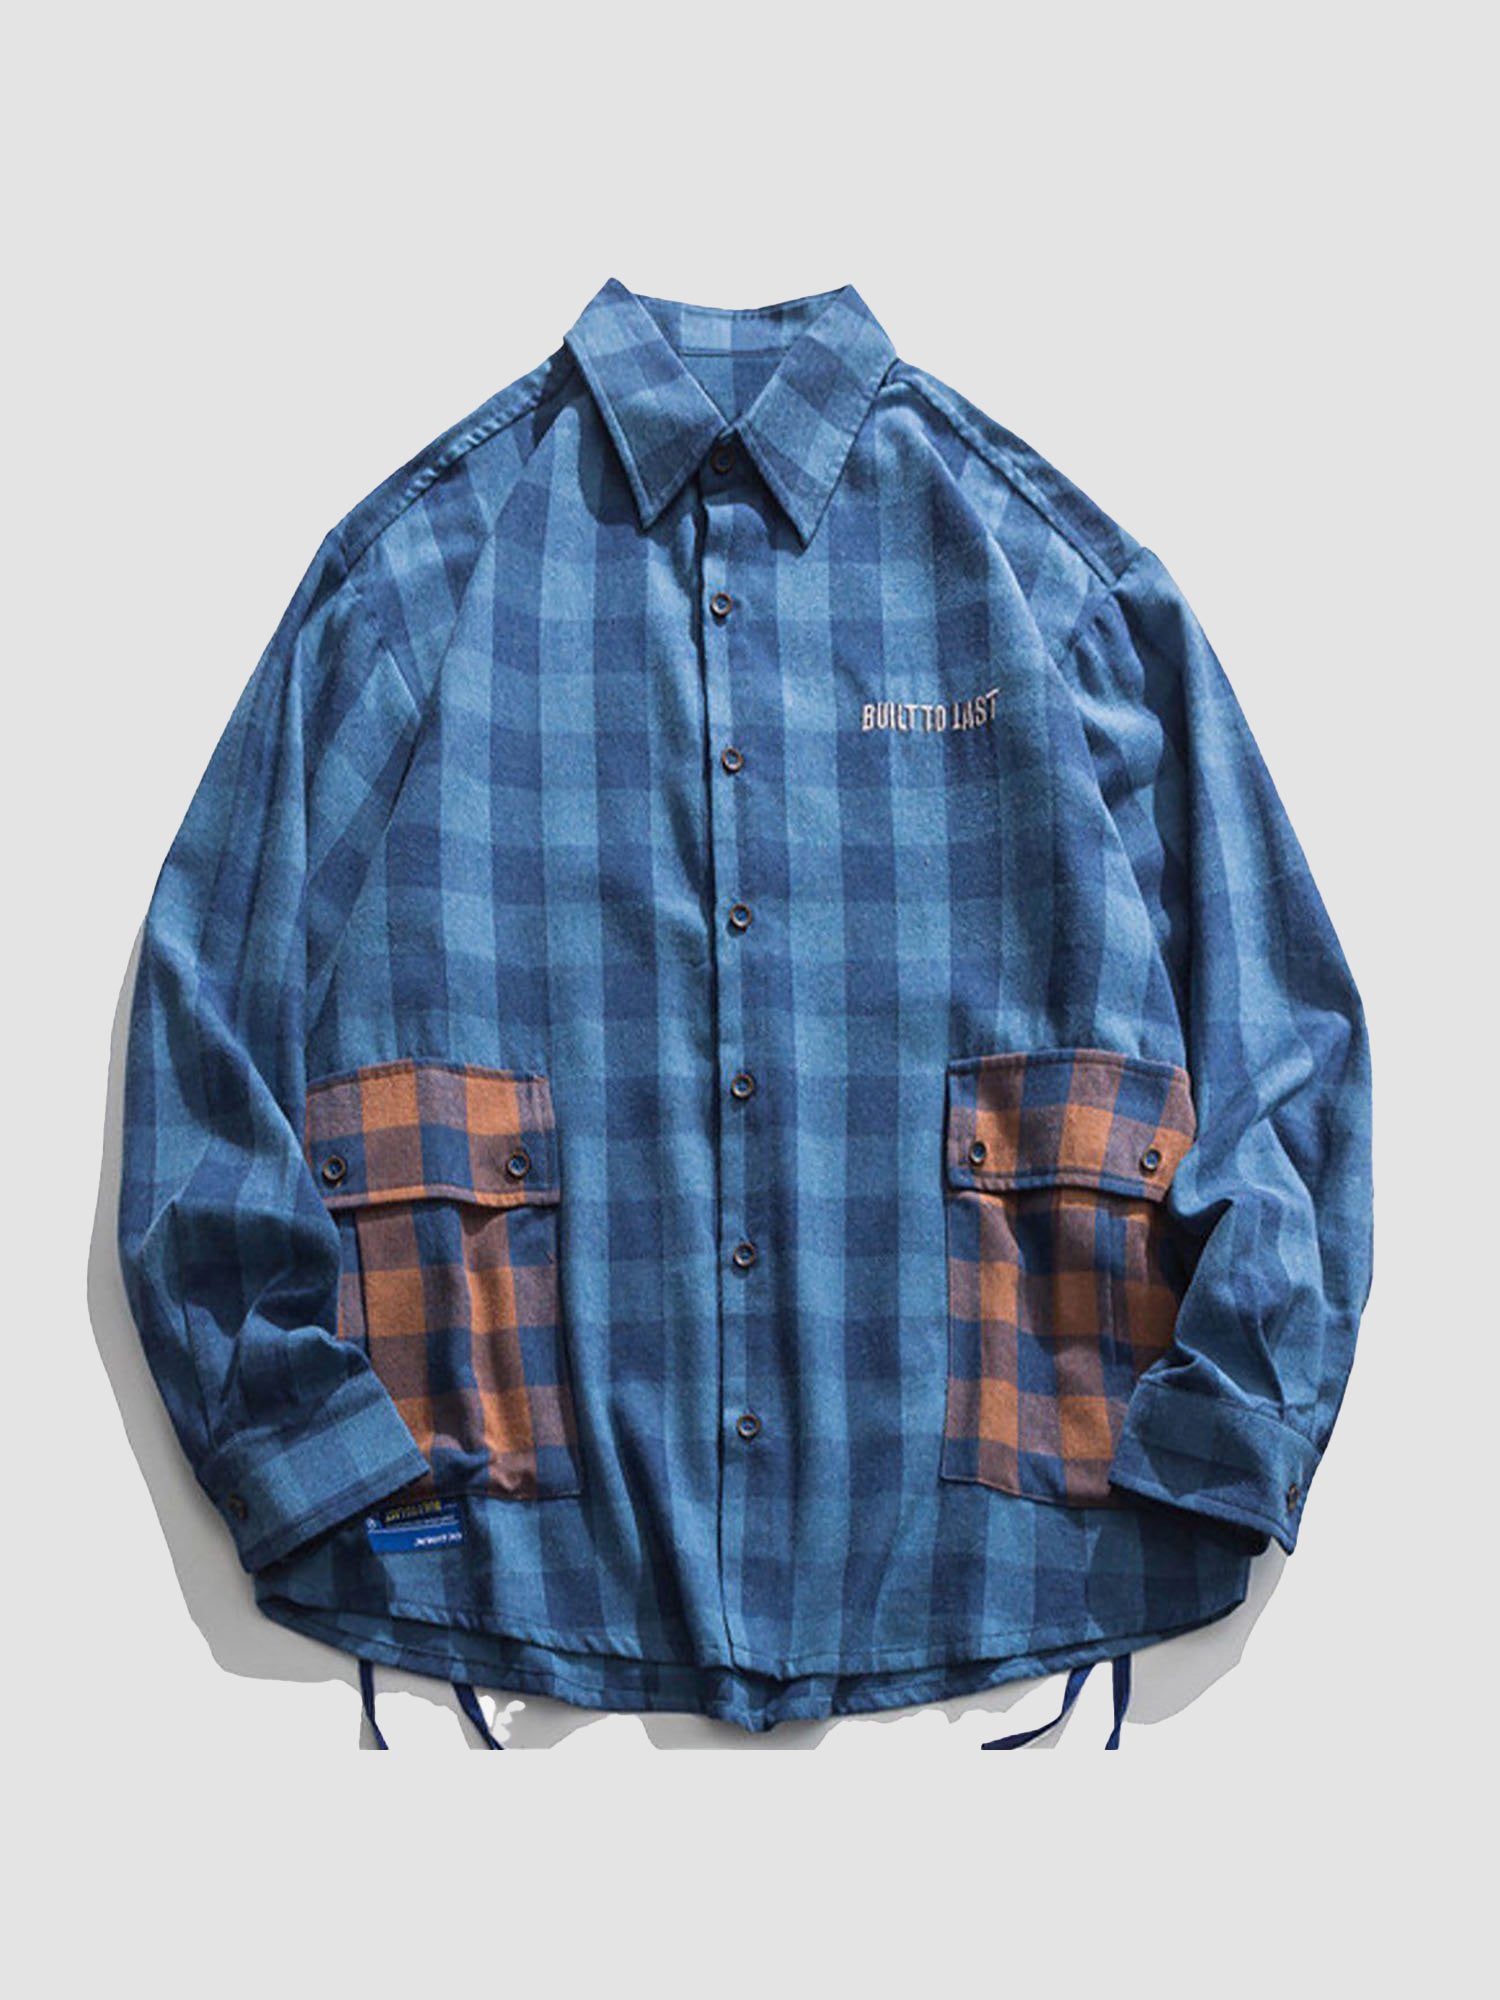 JUSTNOTAG Vintage Contrast Plaid Long-sleeved Shirt